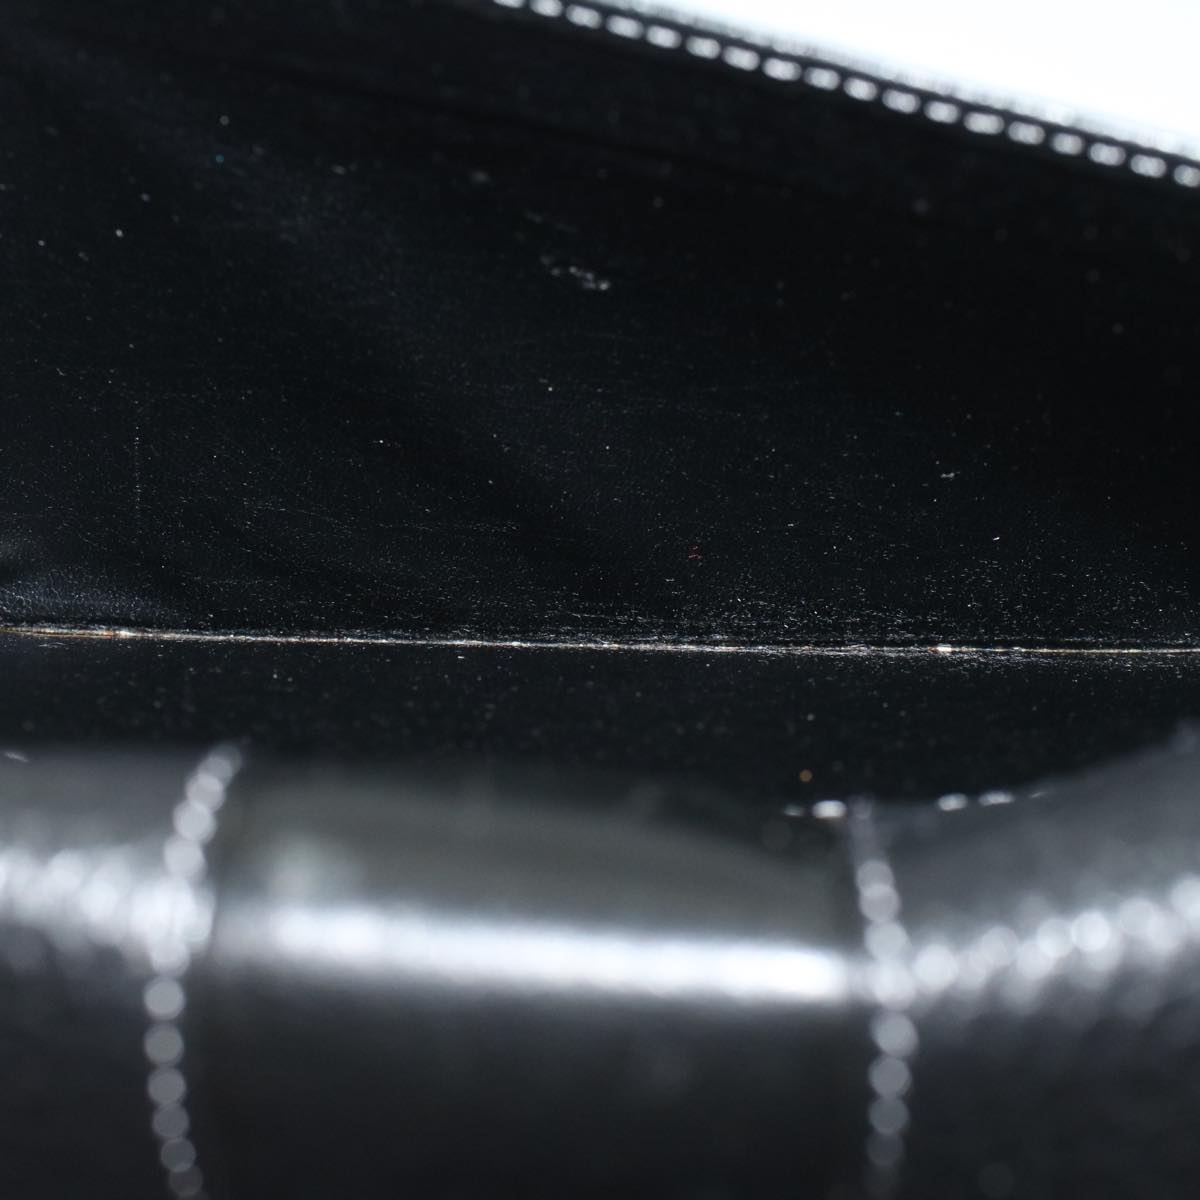 Burberrys Clutch Bag Leather Black Auth yk7752